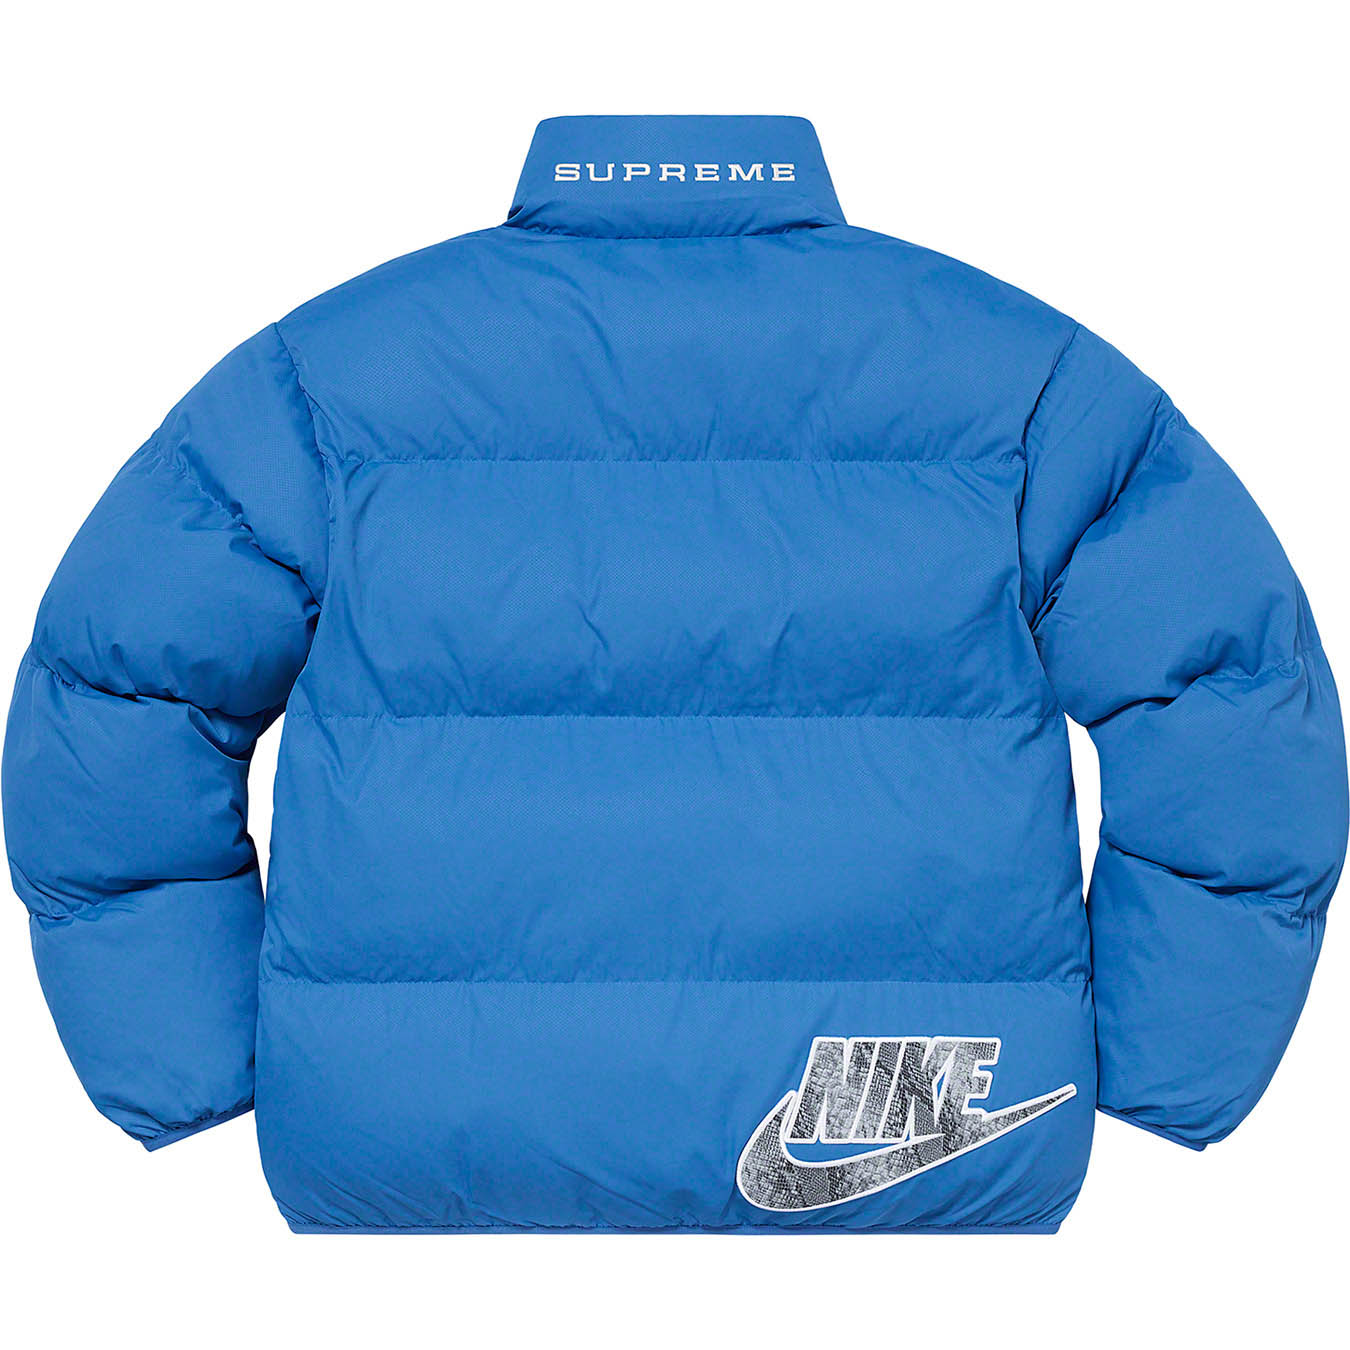 Supreme®/Nike® Reversible Puffy Jacket